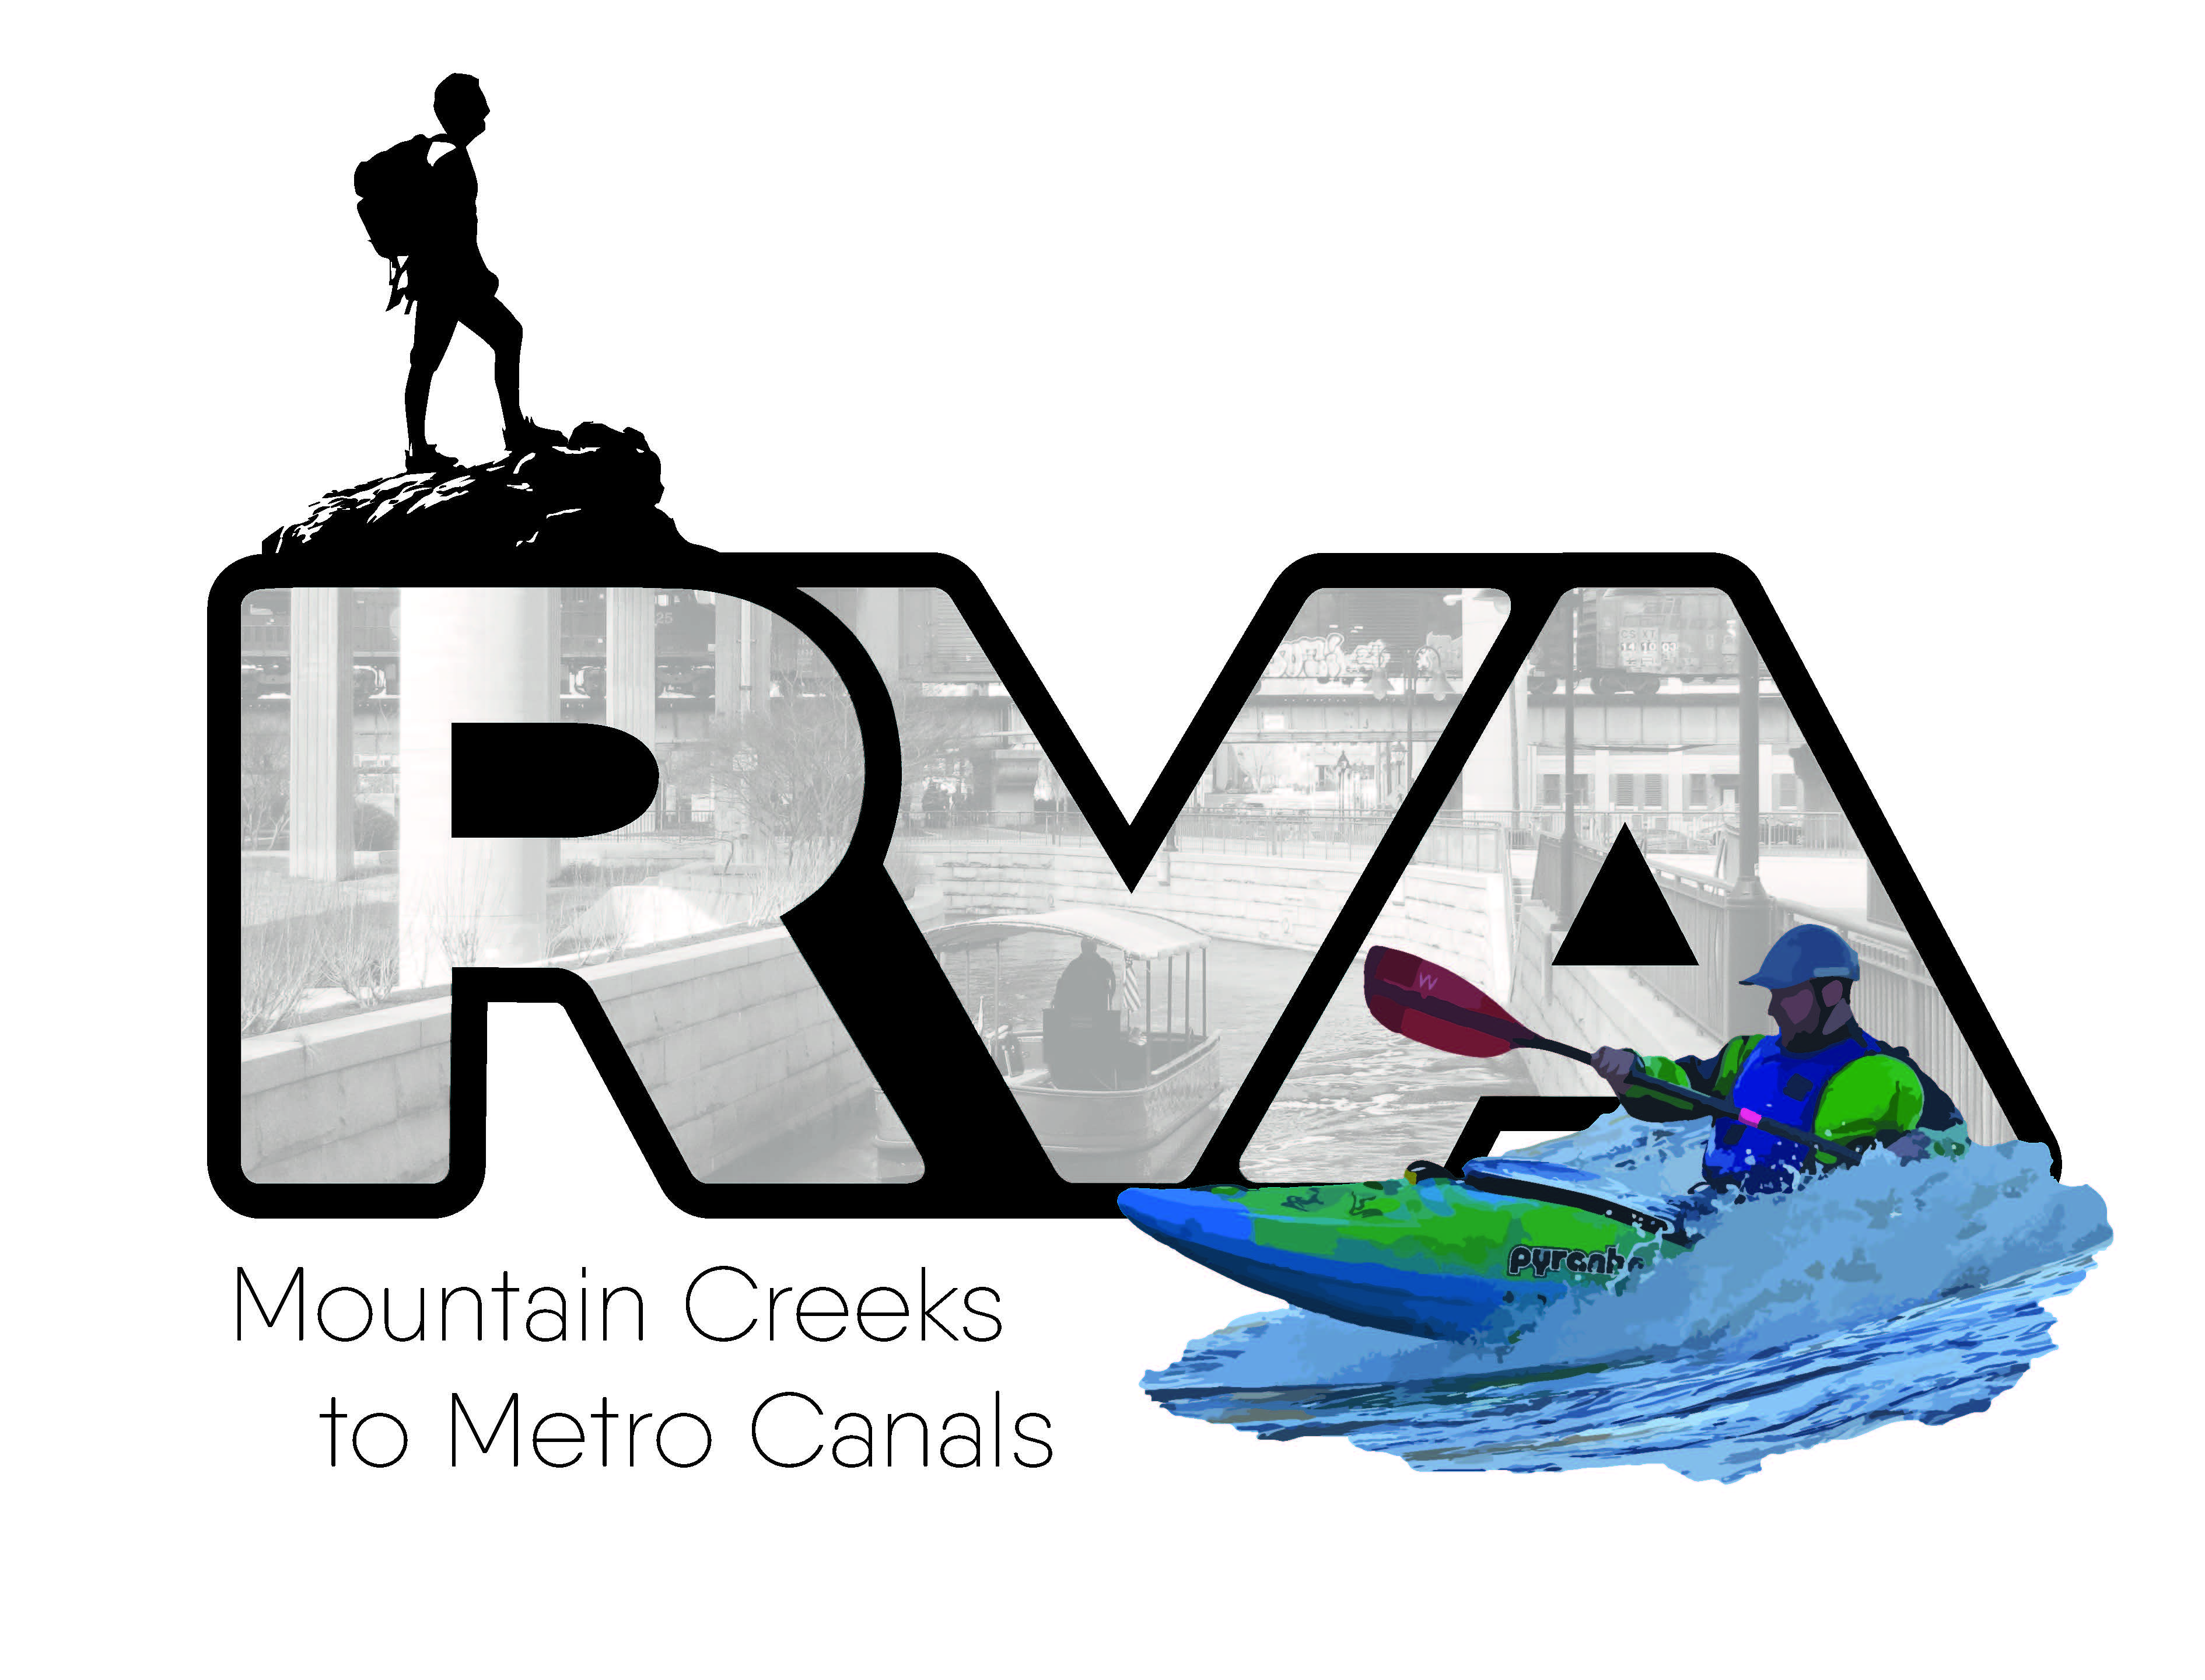 Mountain Creeks to Metro Canals 2020 Management Symposium